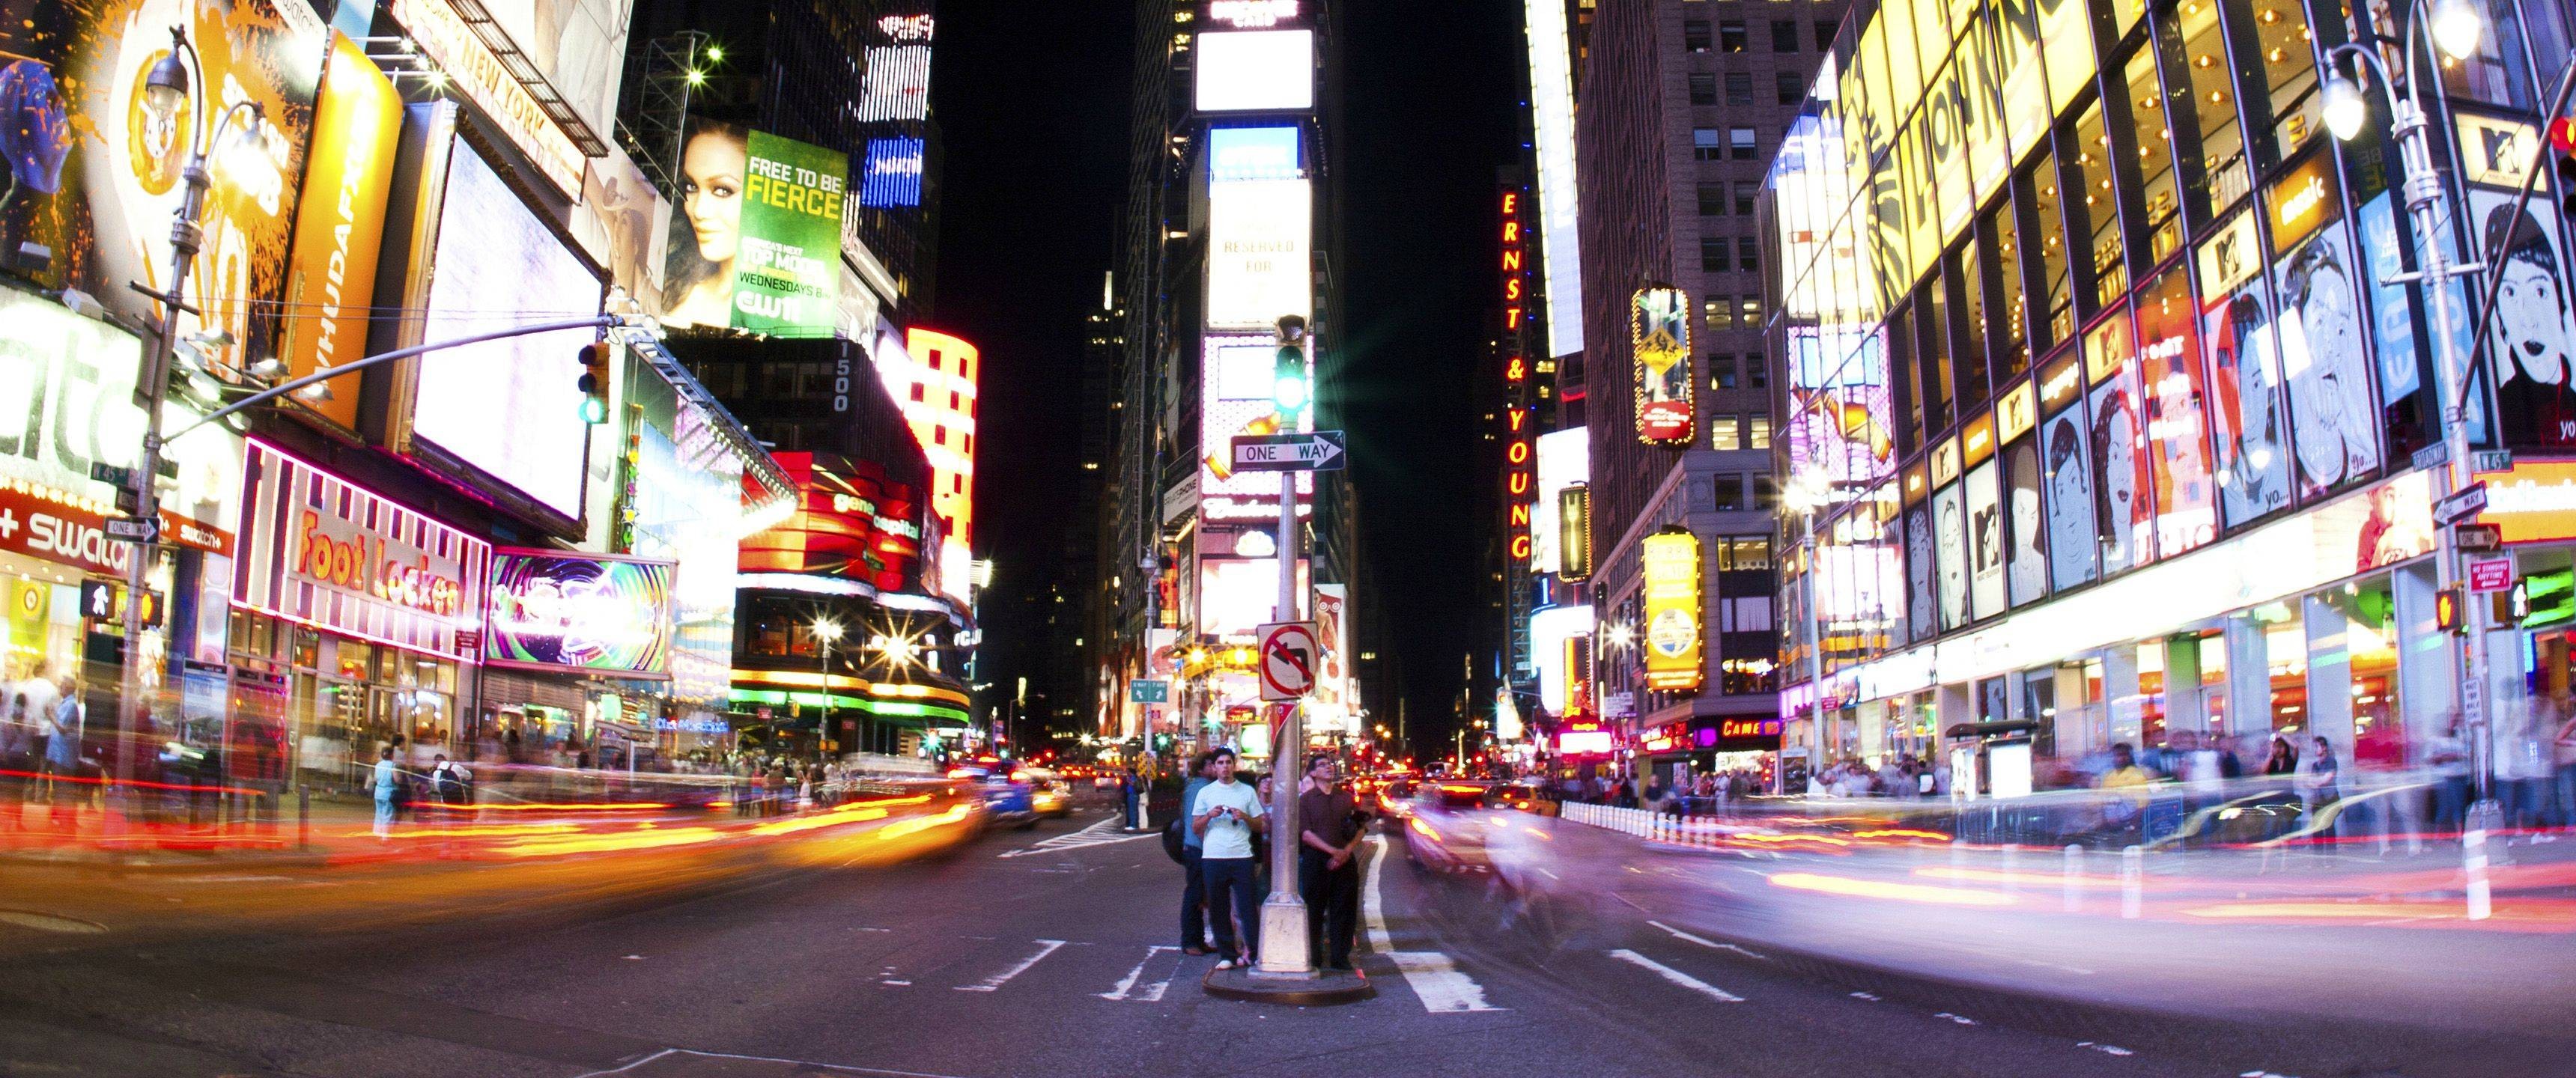 General 3440x1440 neon city night people motion blur USA New York City